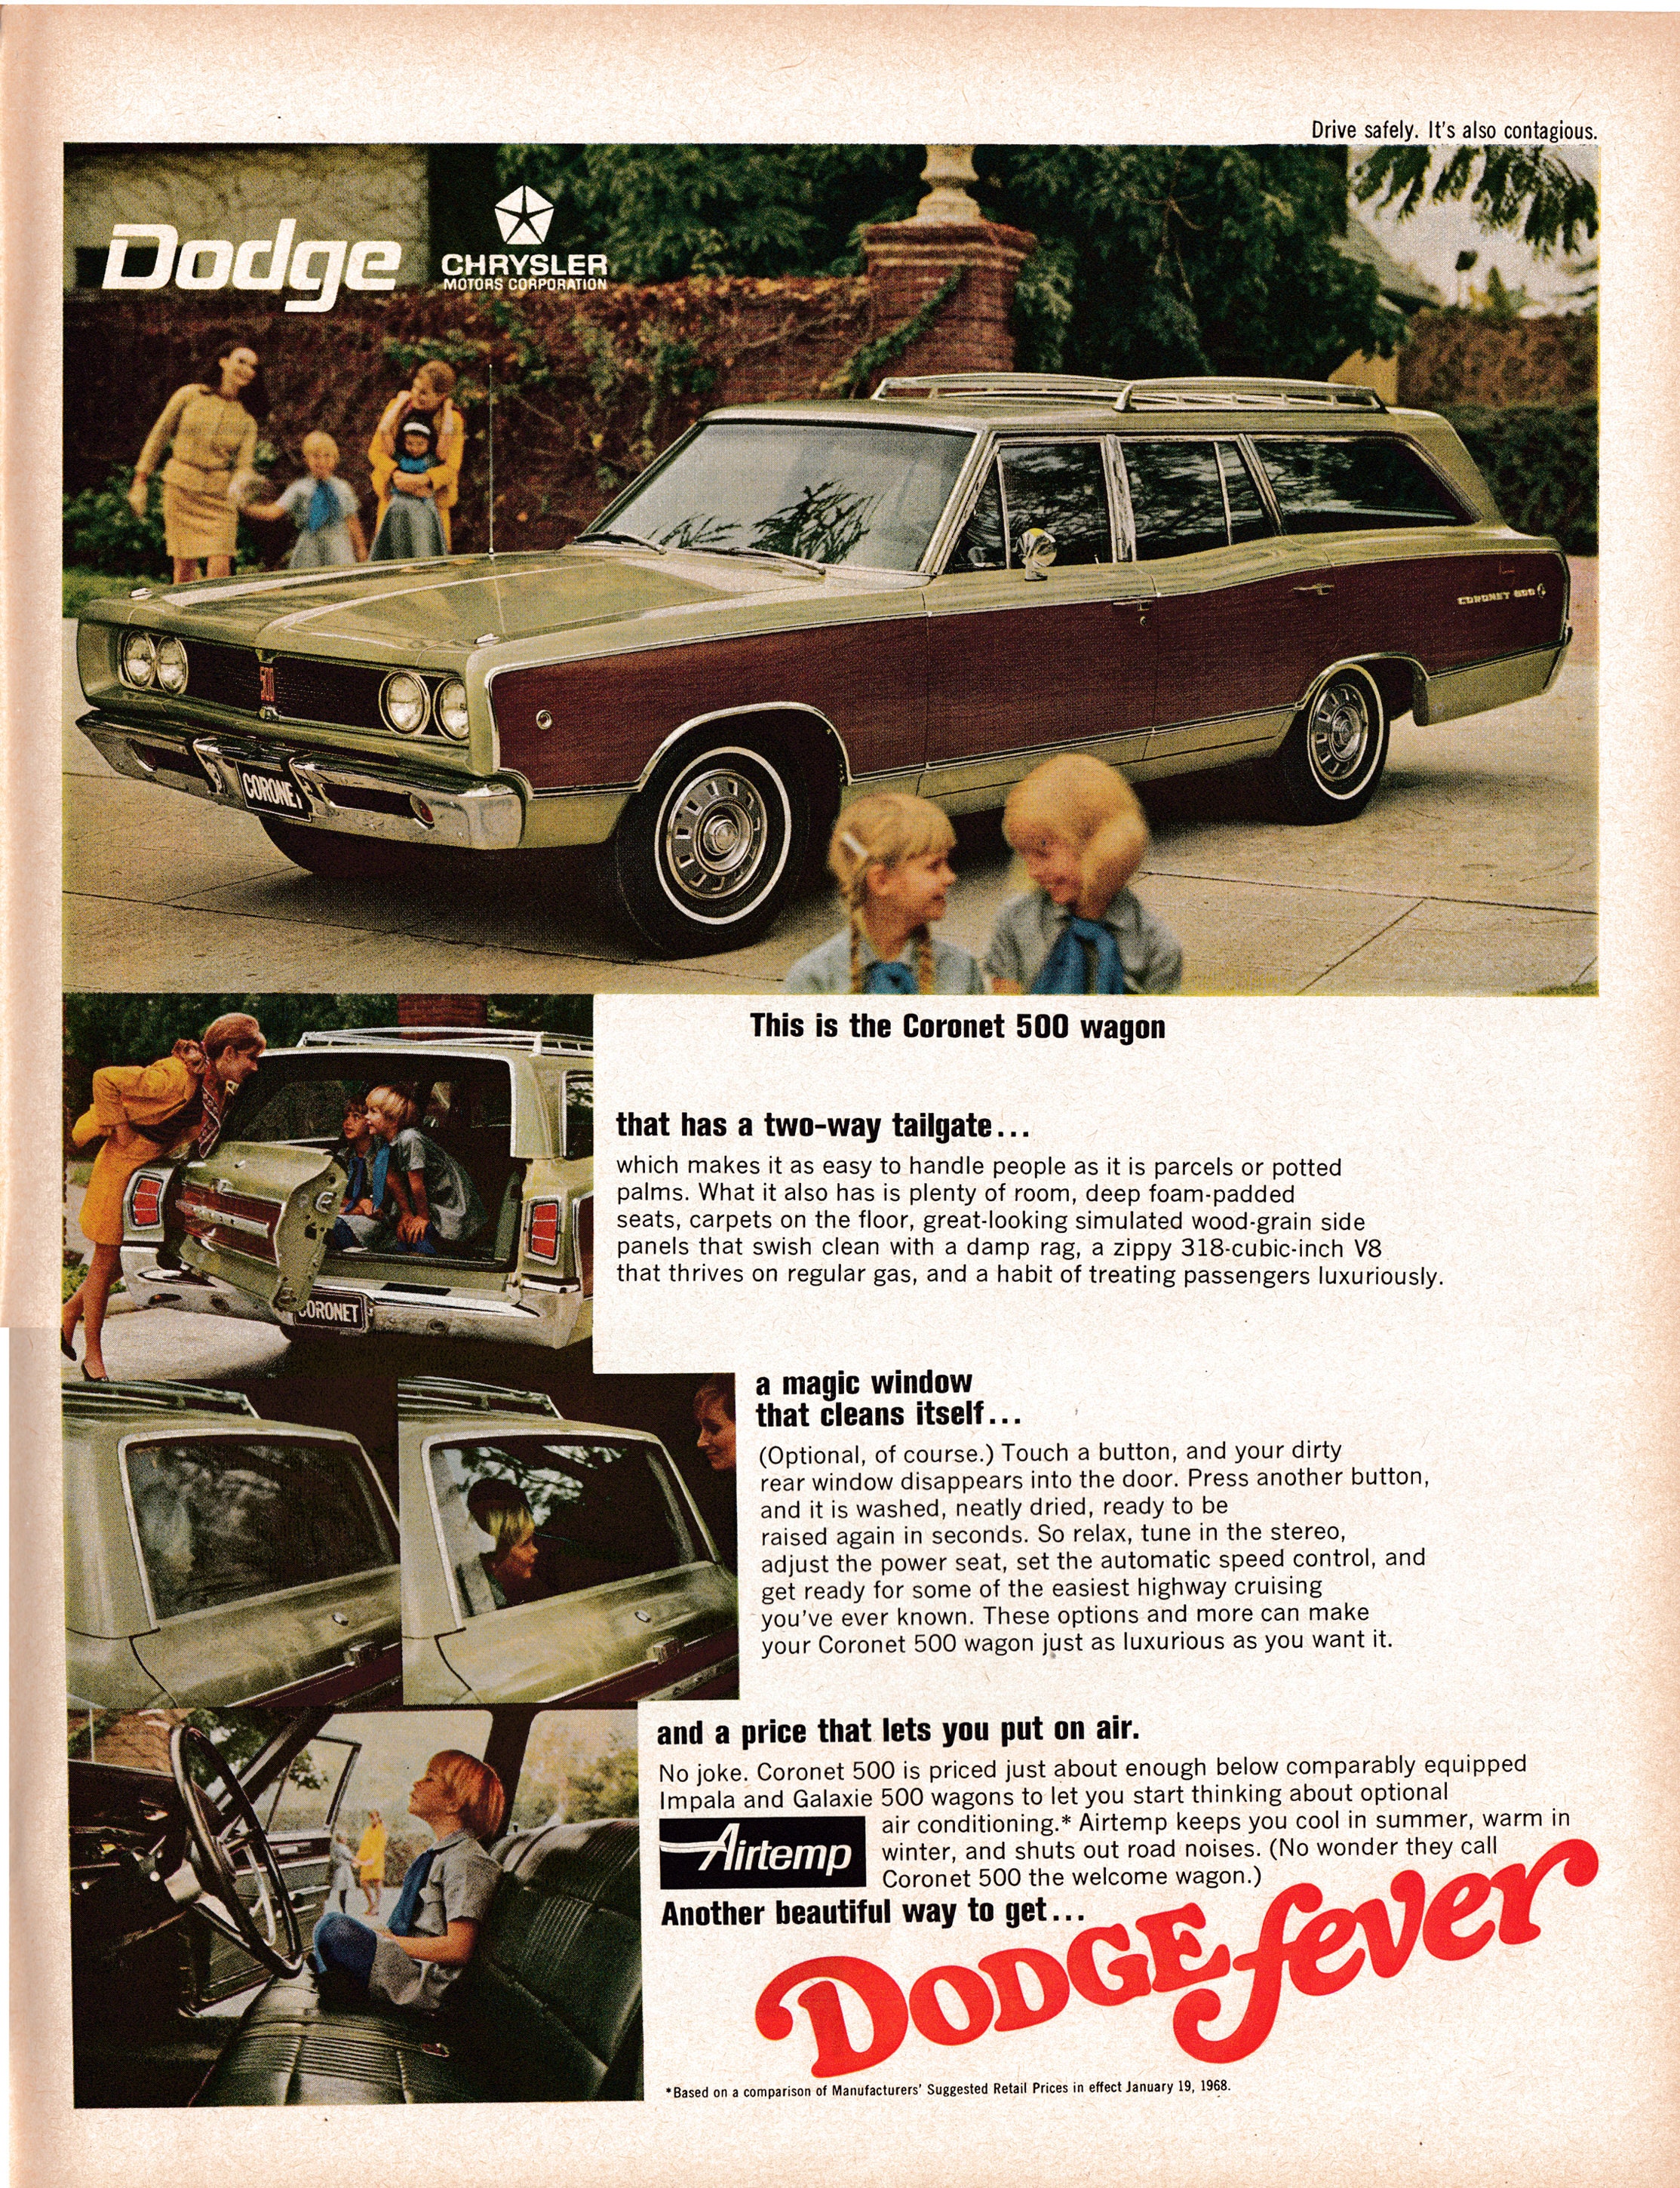 1968 Dodge Coronet 500 Station Wagon 318 Cu V8 - Original Magazine Ad